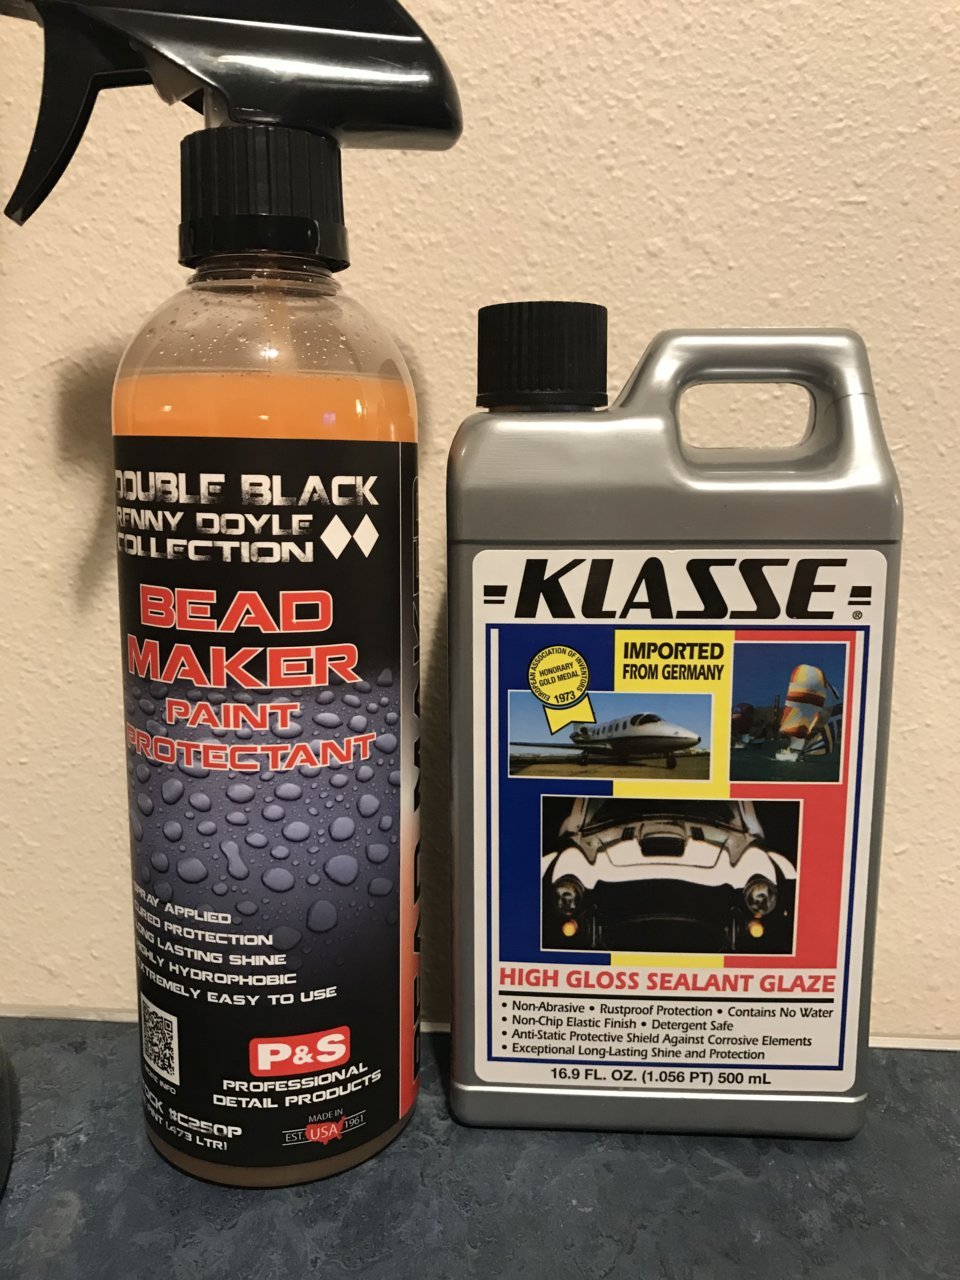 Meguiar's Whole Car Air Refresher, Odor Eliminator Spray Eliminates Strong  Vehicle Odors, Black Chrome Scent – 2 Oz Spray Bottle